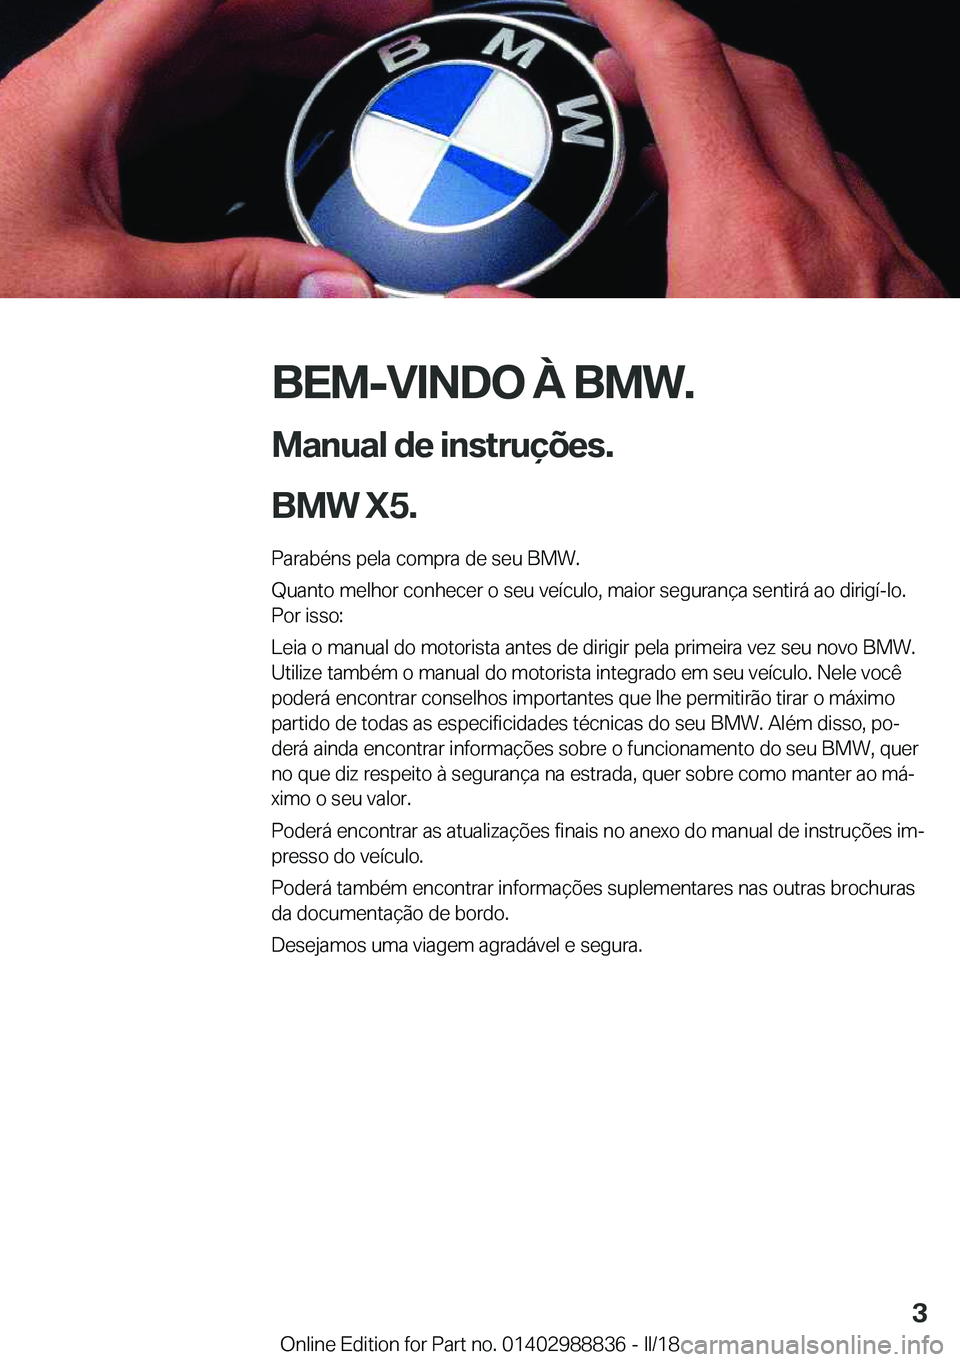 BMW X5 2018  Manual do condutor (in Portuguese) �B�E�M�-�V�I�N�D�O��À��B�M�W�.
�M�a�n�u�a�l��d�e��i�n�s�t�r�u�